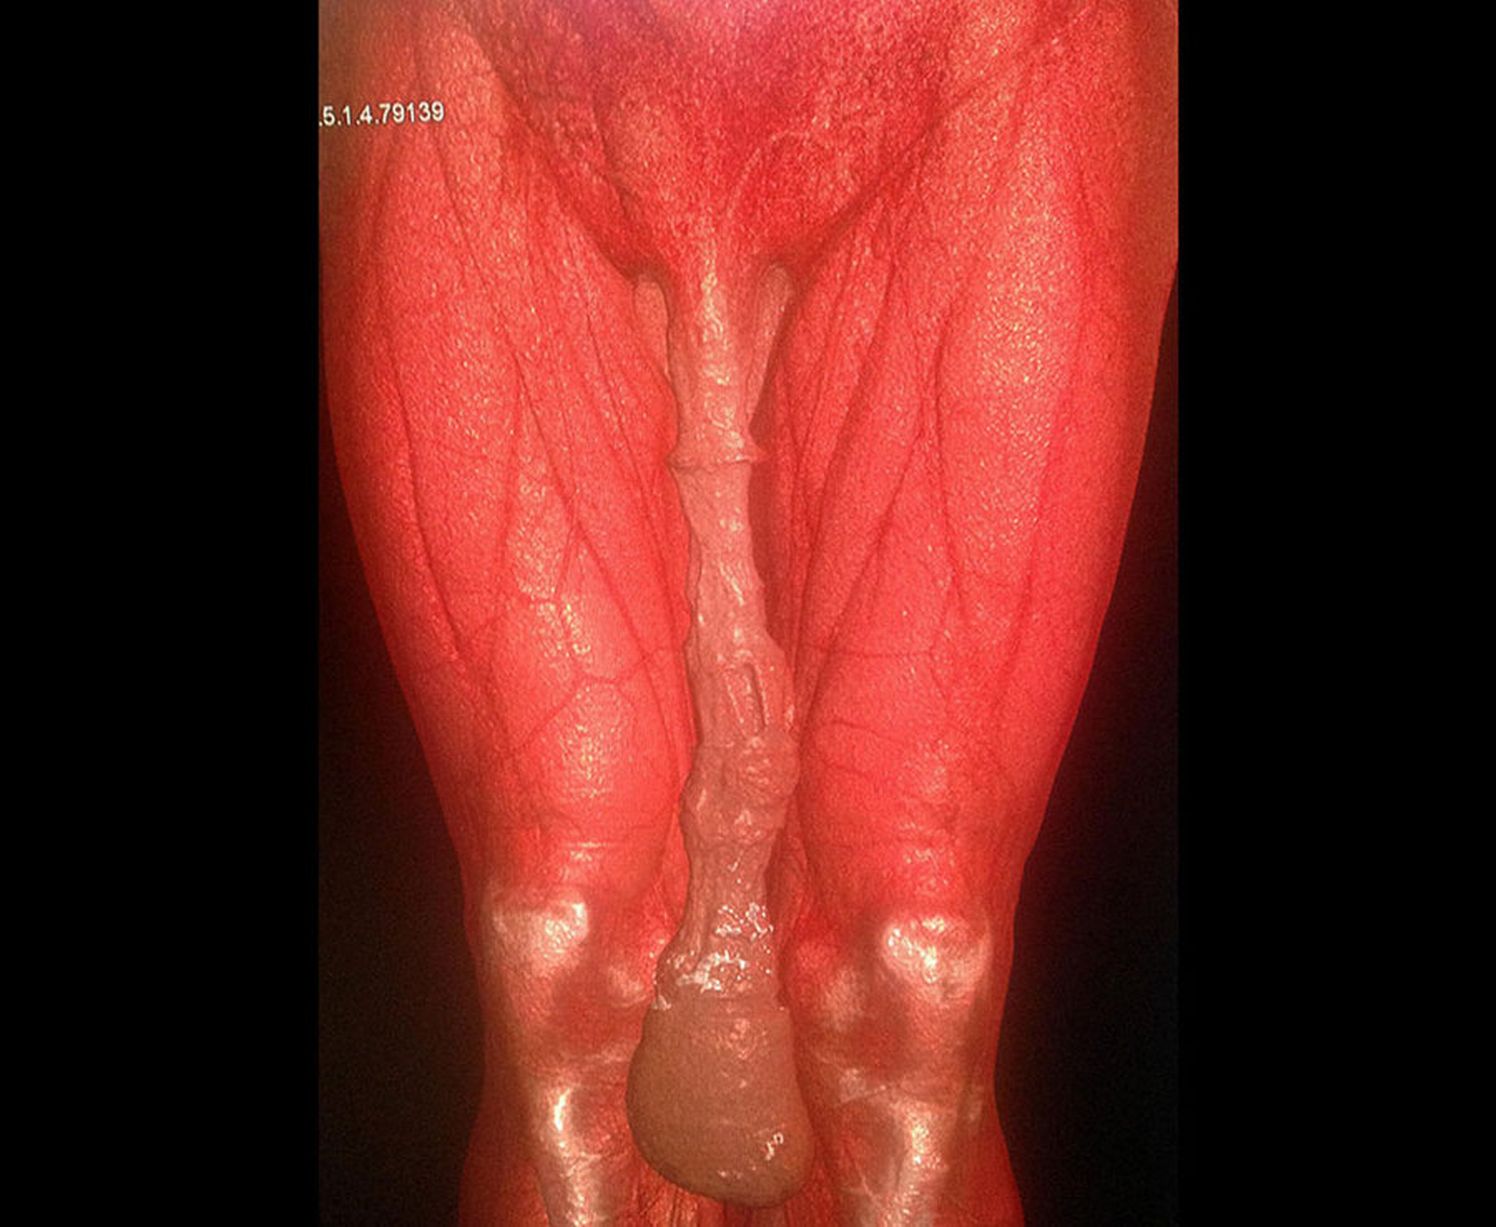 ario prakoso share worlds largest penis nude photos